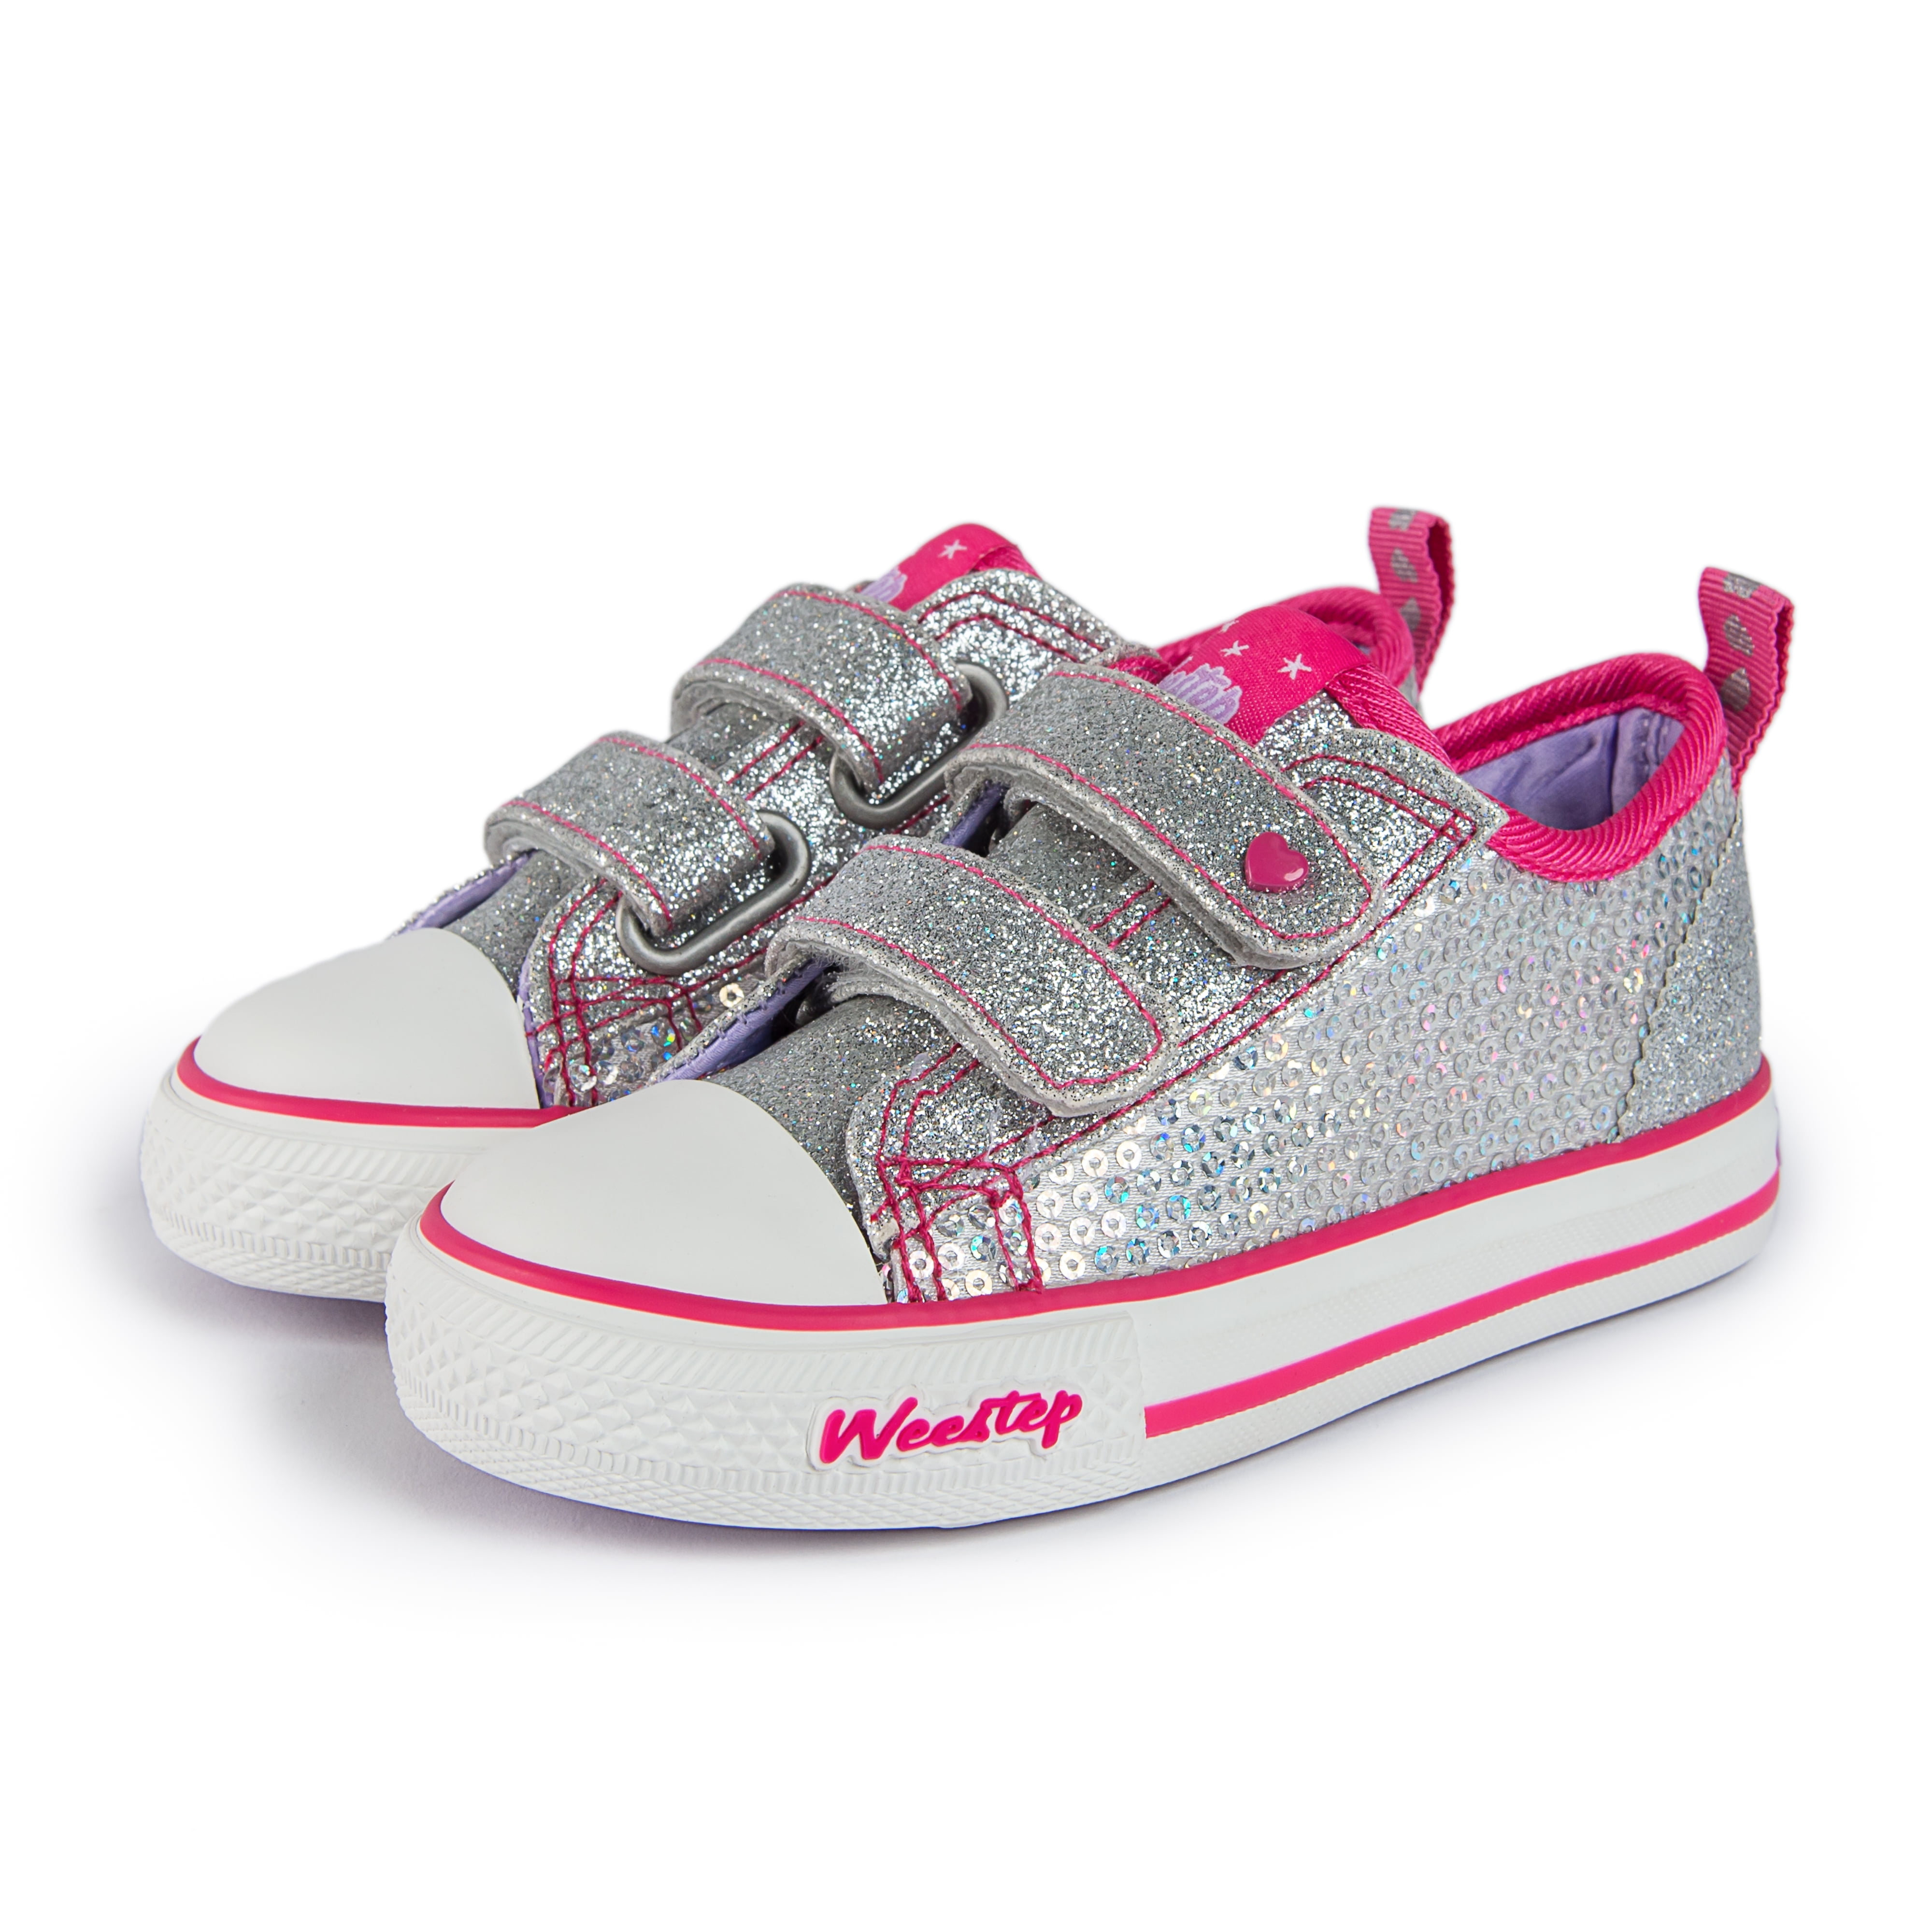 Weestep Toddler/Little Kids Girls Low Top Sneaker